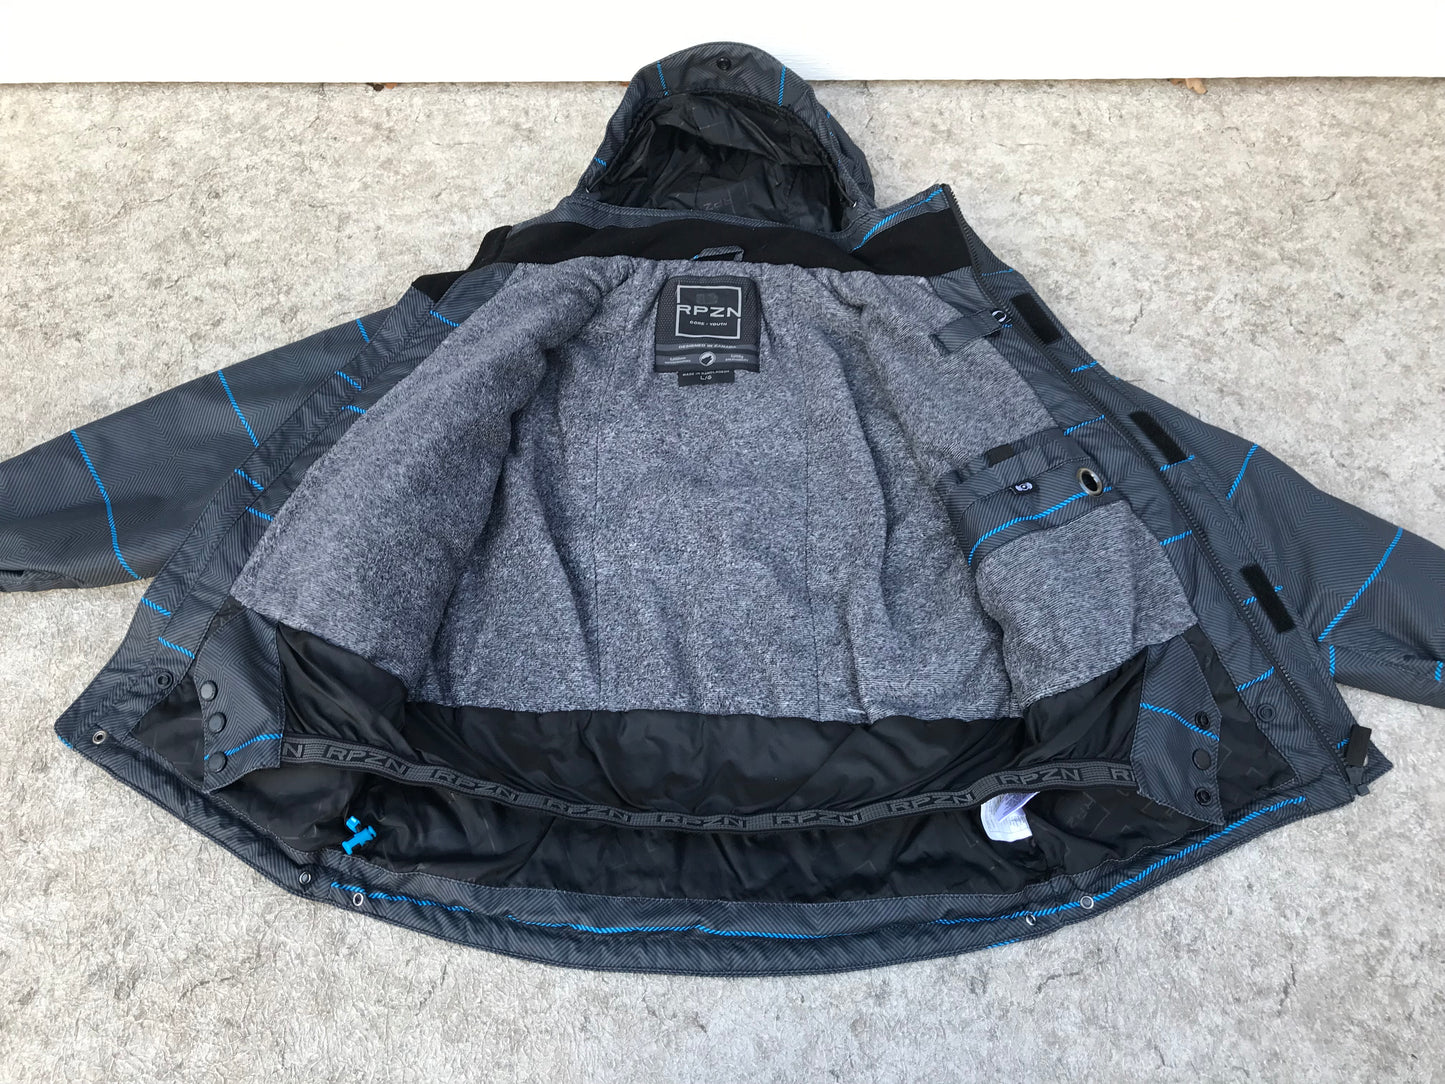 Winter Coat Child Size 12-14 Ripzone Core Black Blue With Snow Belt New Demo Model